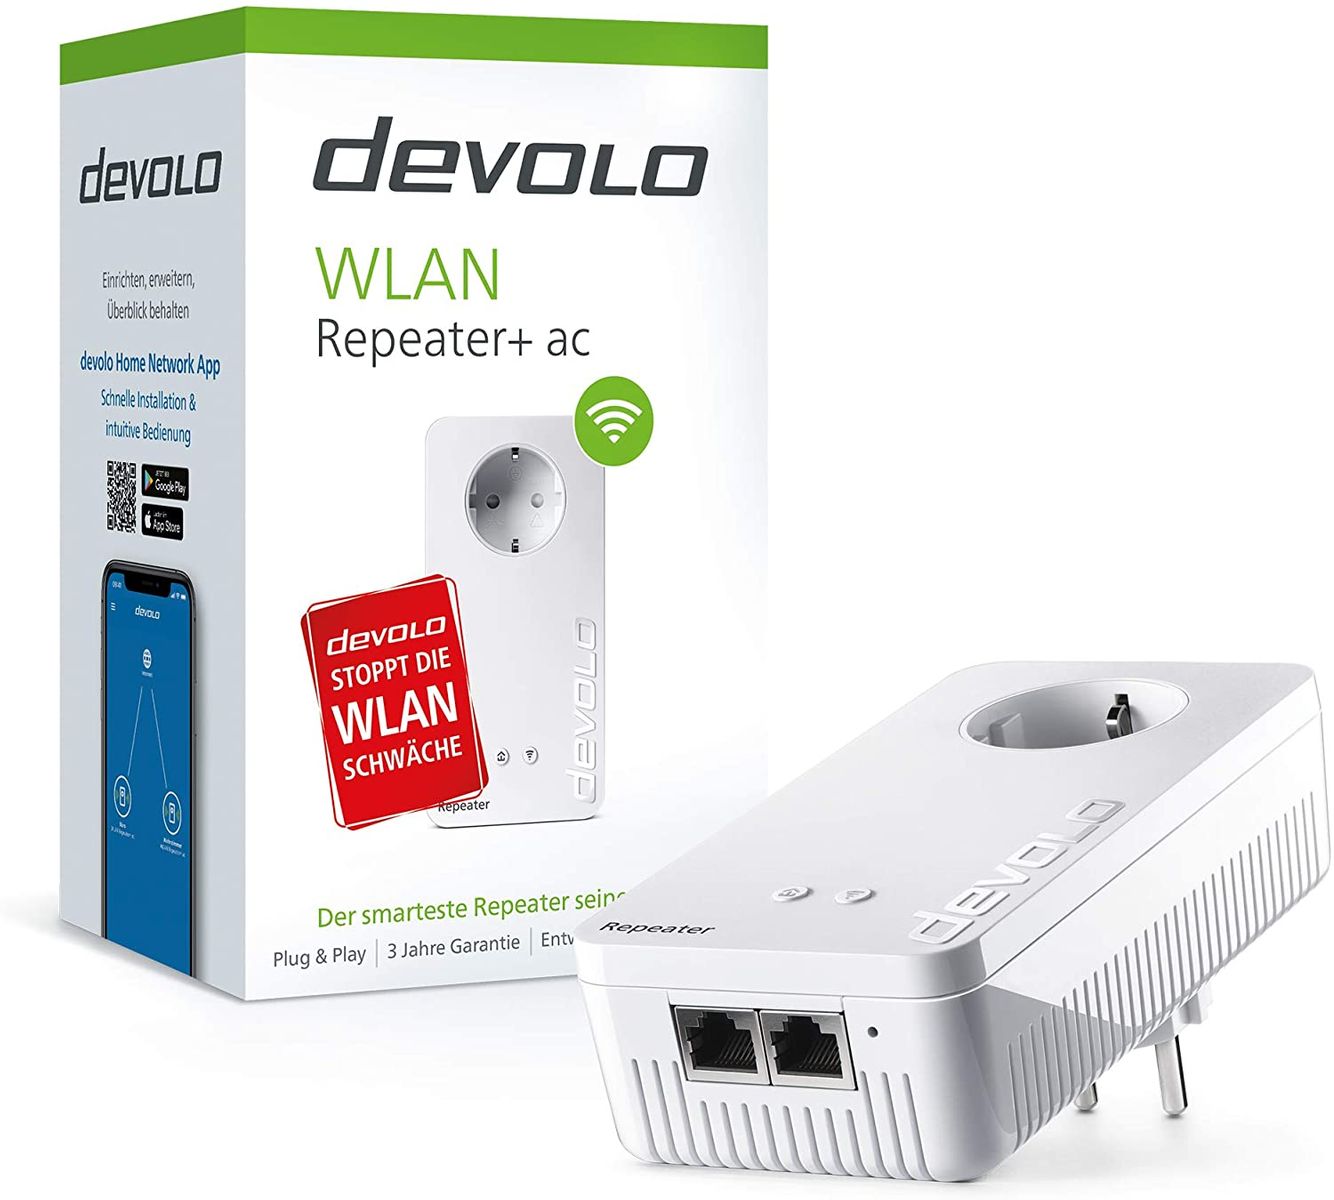 Devolo WLAN Repeater+ ac: WiFi-Verstärker Steckdose schnelleres Internet dank Dual-WiFi kompatibel allen Routern 1200 Mbit/s 2x LAN-Ports AP-Modus Access Point